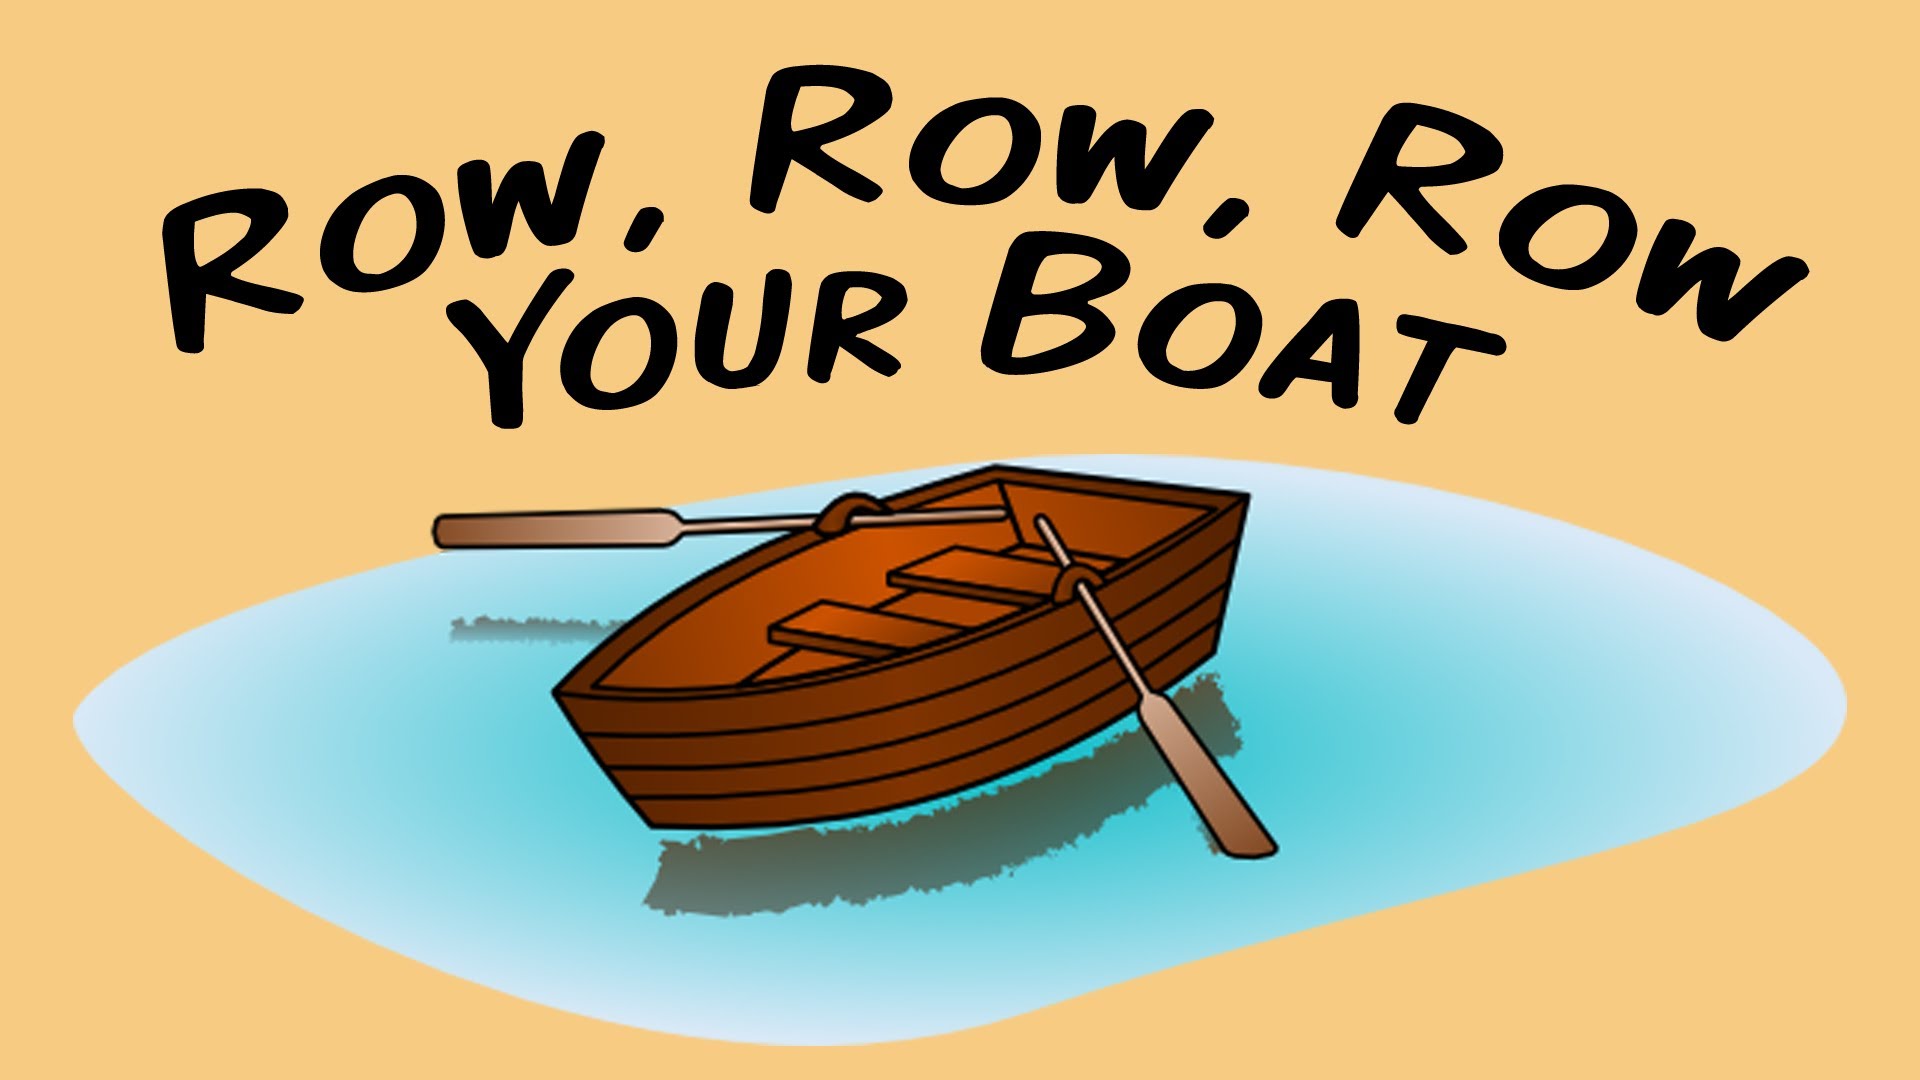 Есть слова лодка. Row your Boat. Row Row your Boat. Row your Boat Song. Row Row the Boat.